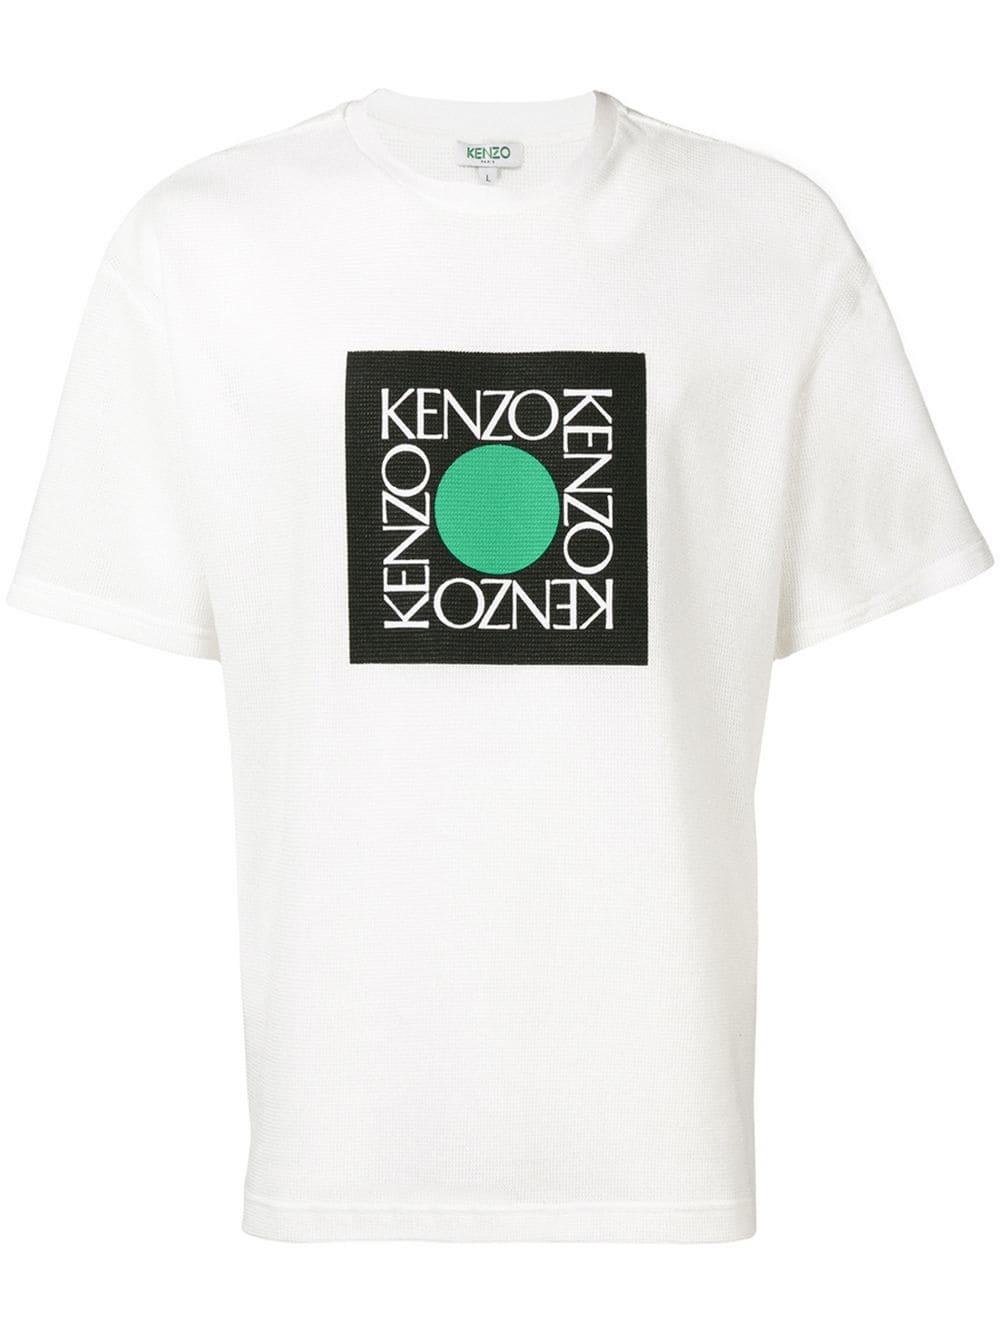 Kenzo Square Logo T Shirt Top Sellers, 51% OFF | www.simbolics.cat